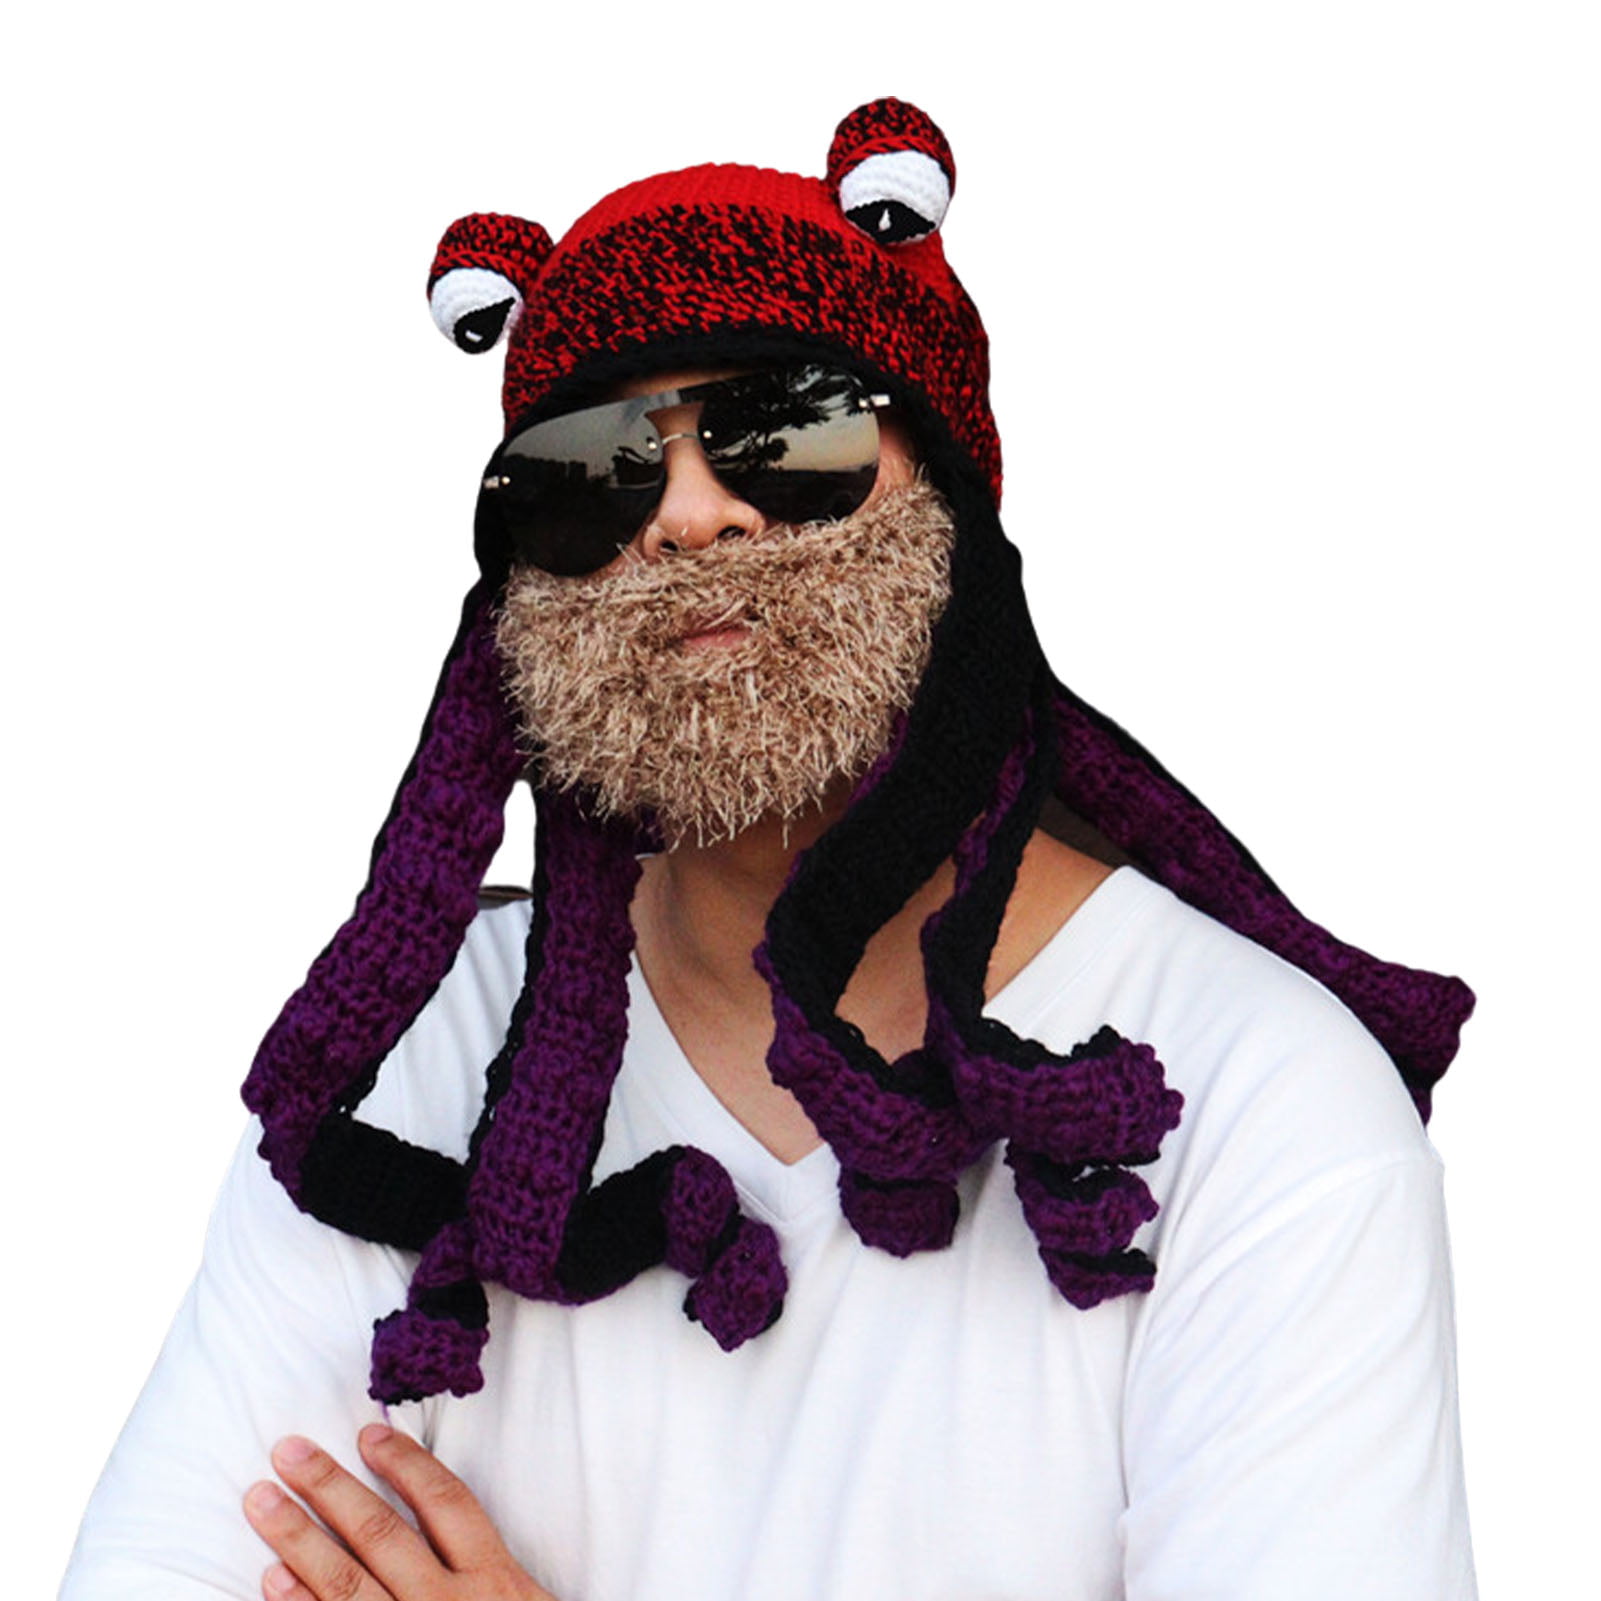 Cute Novelty Hats Funny Christmas Hat Cartoon Octopus Viking Beard Gift Hats